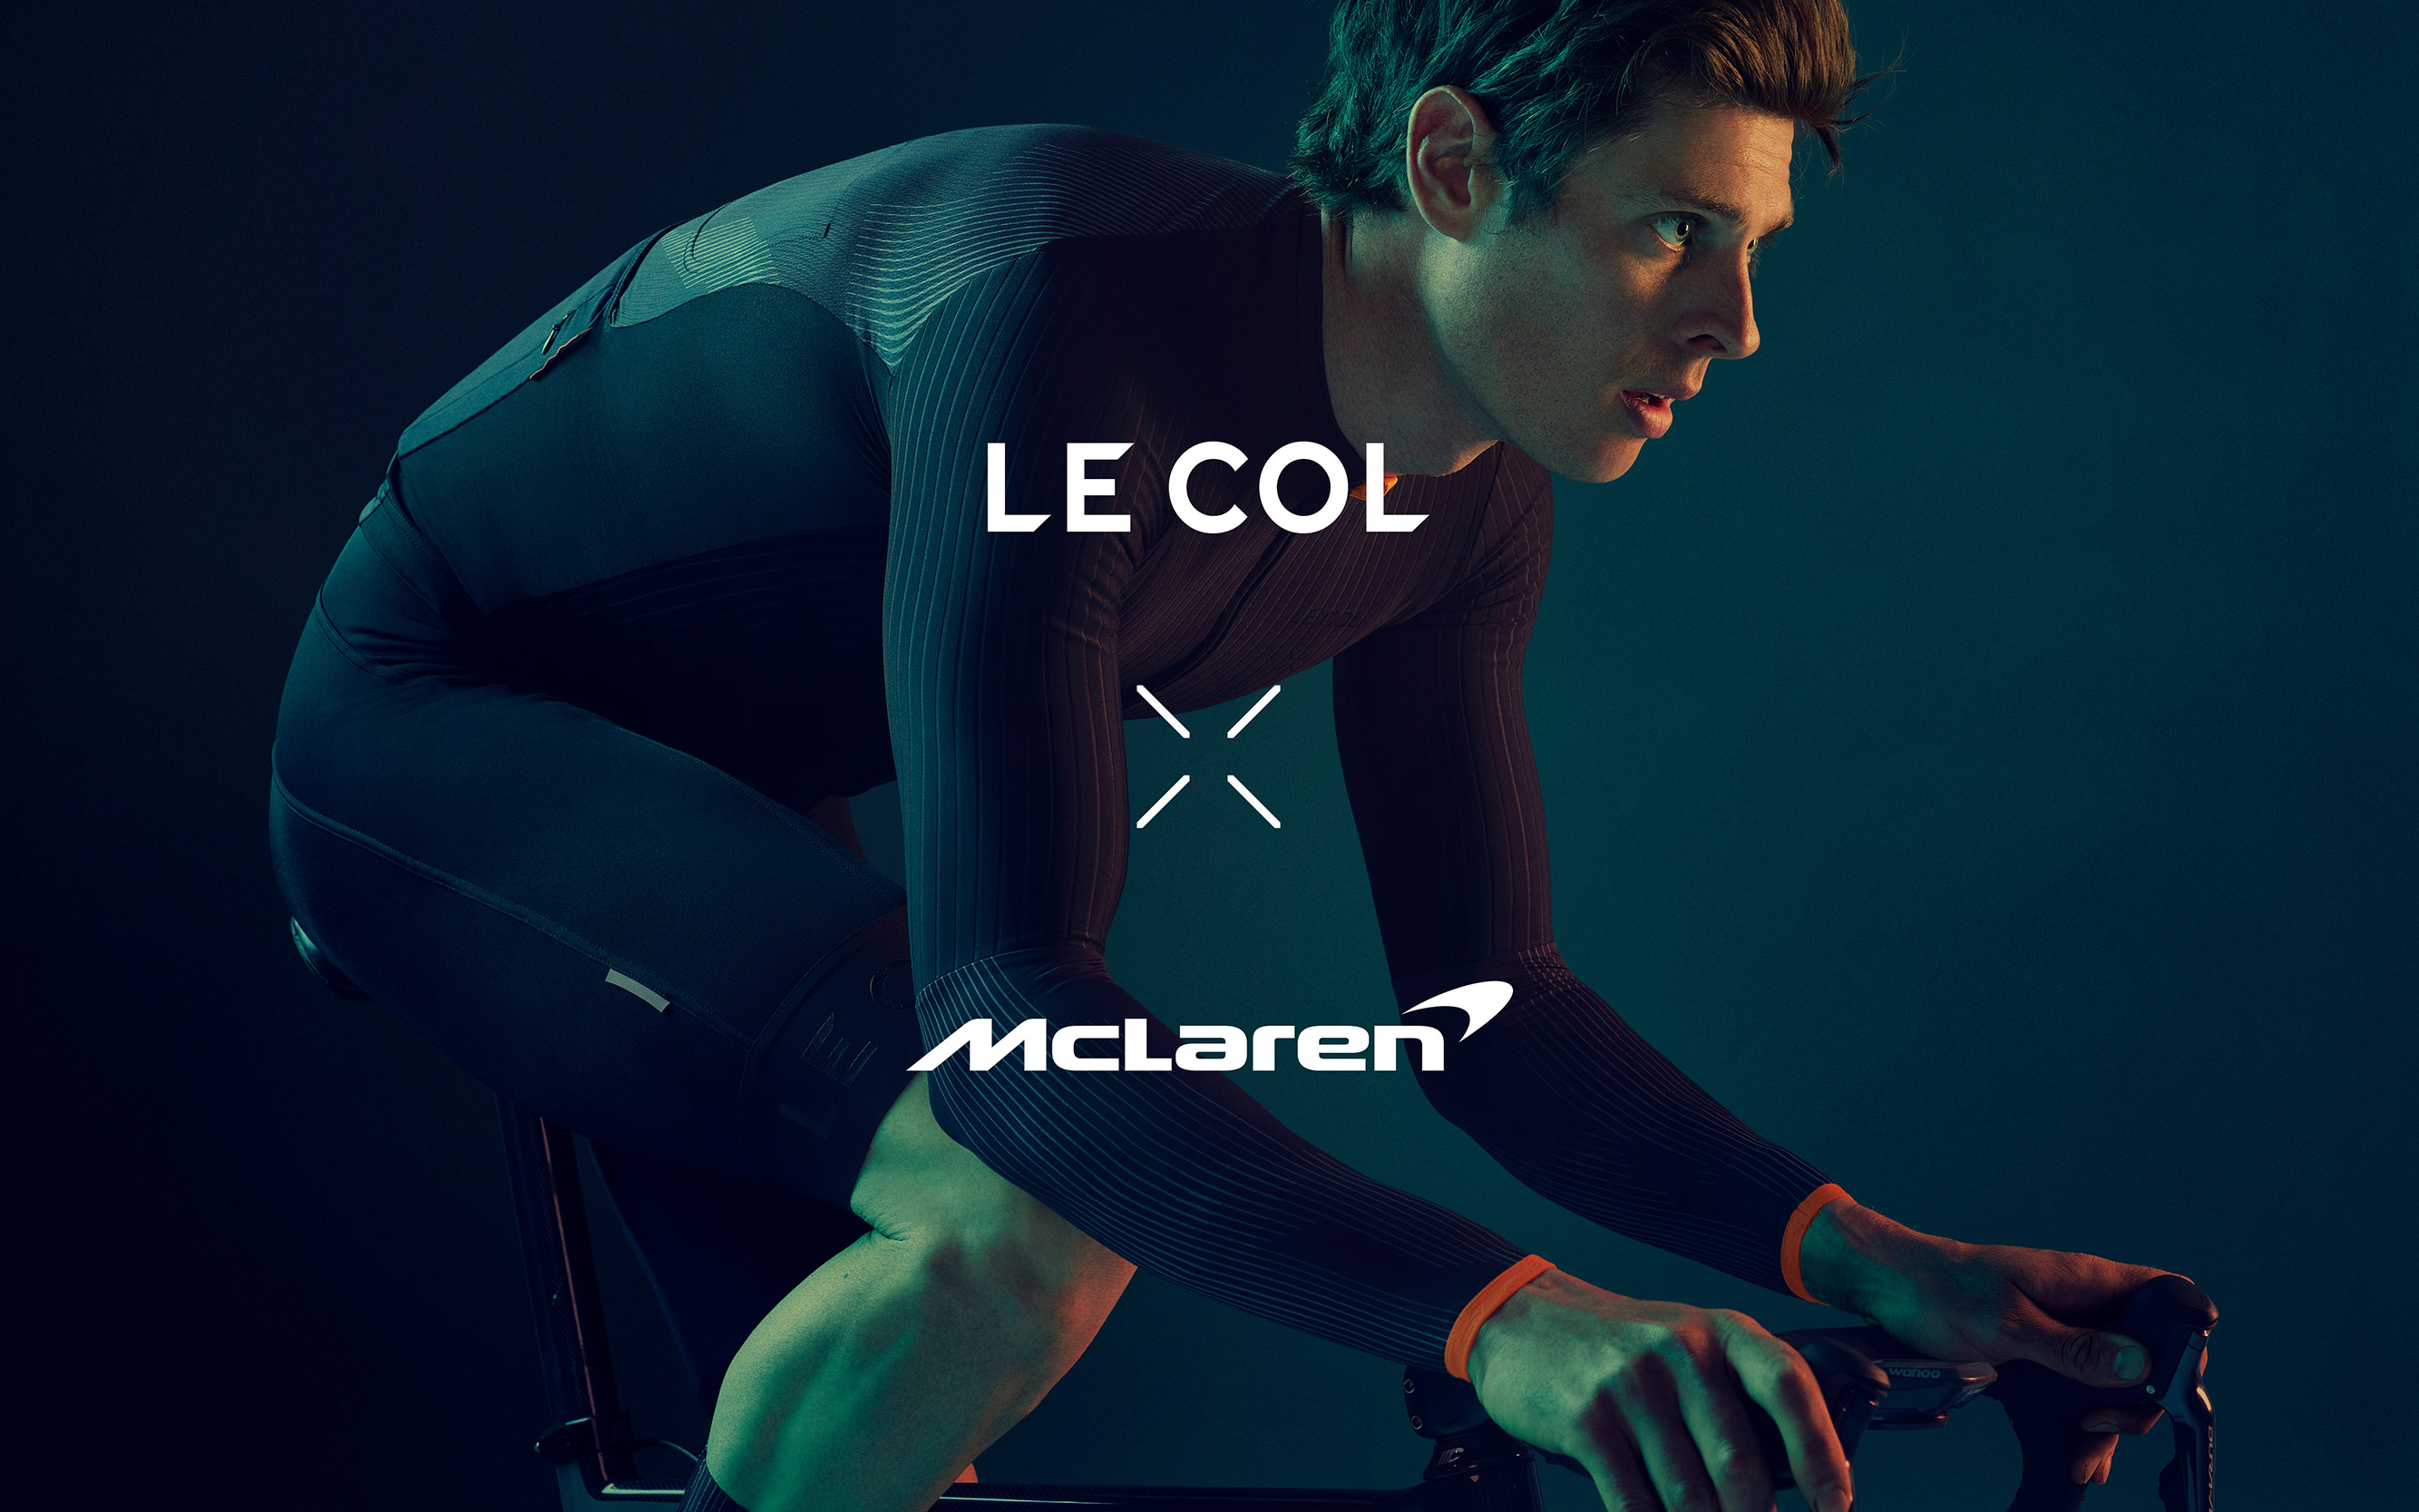 Limited Edition Design  Le Col x McLaren Project Aero - Limited